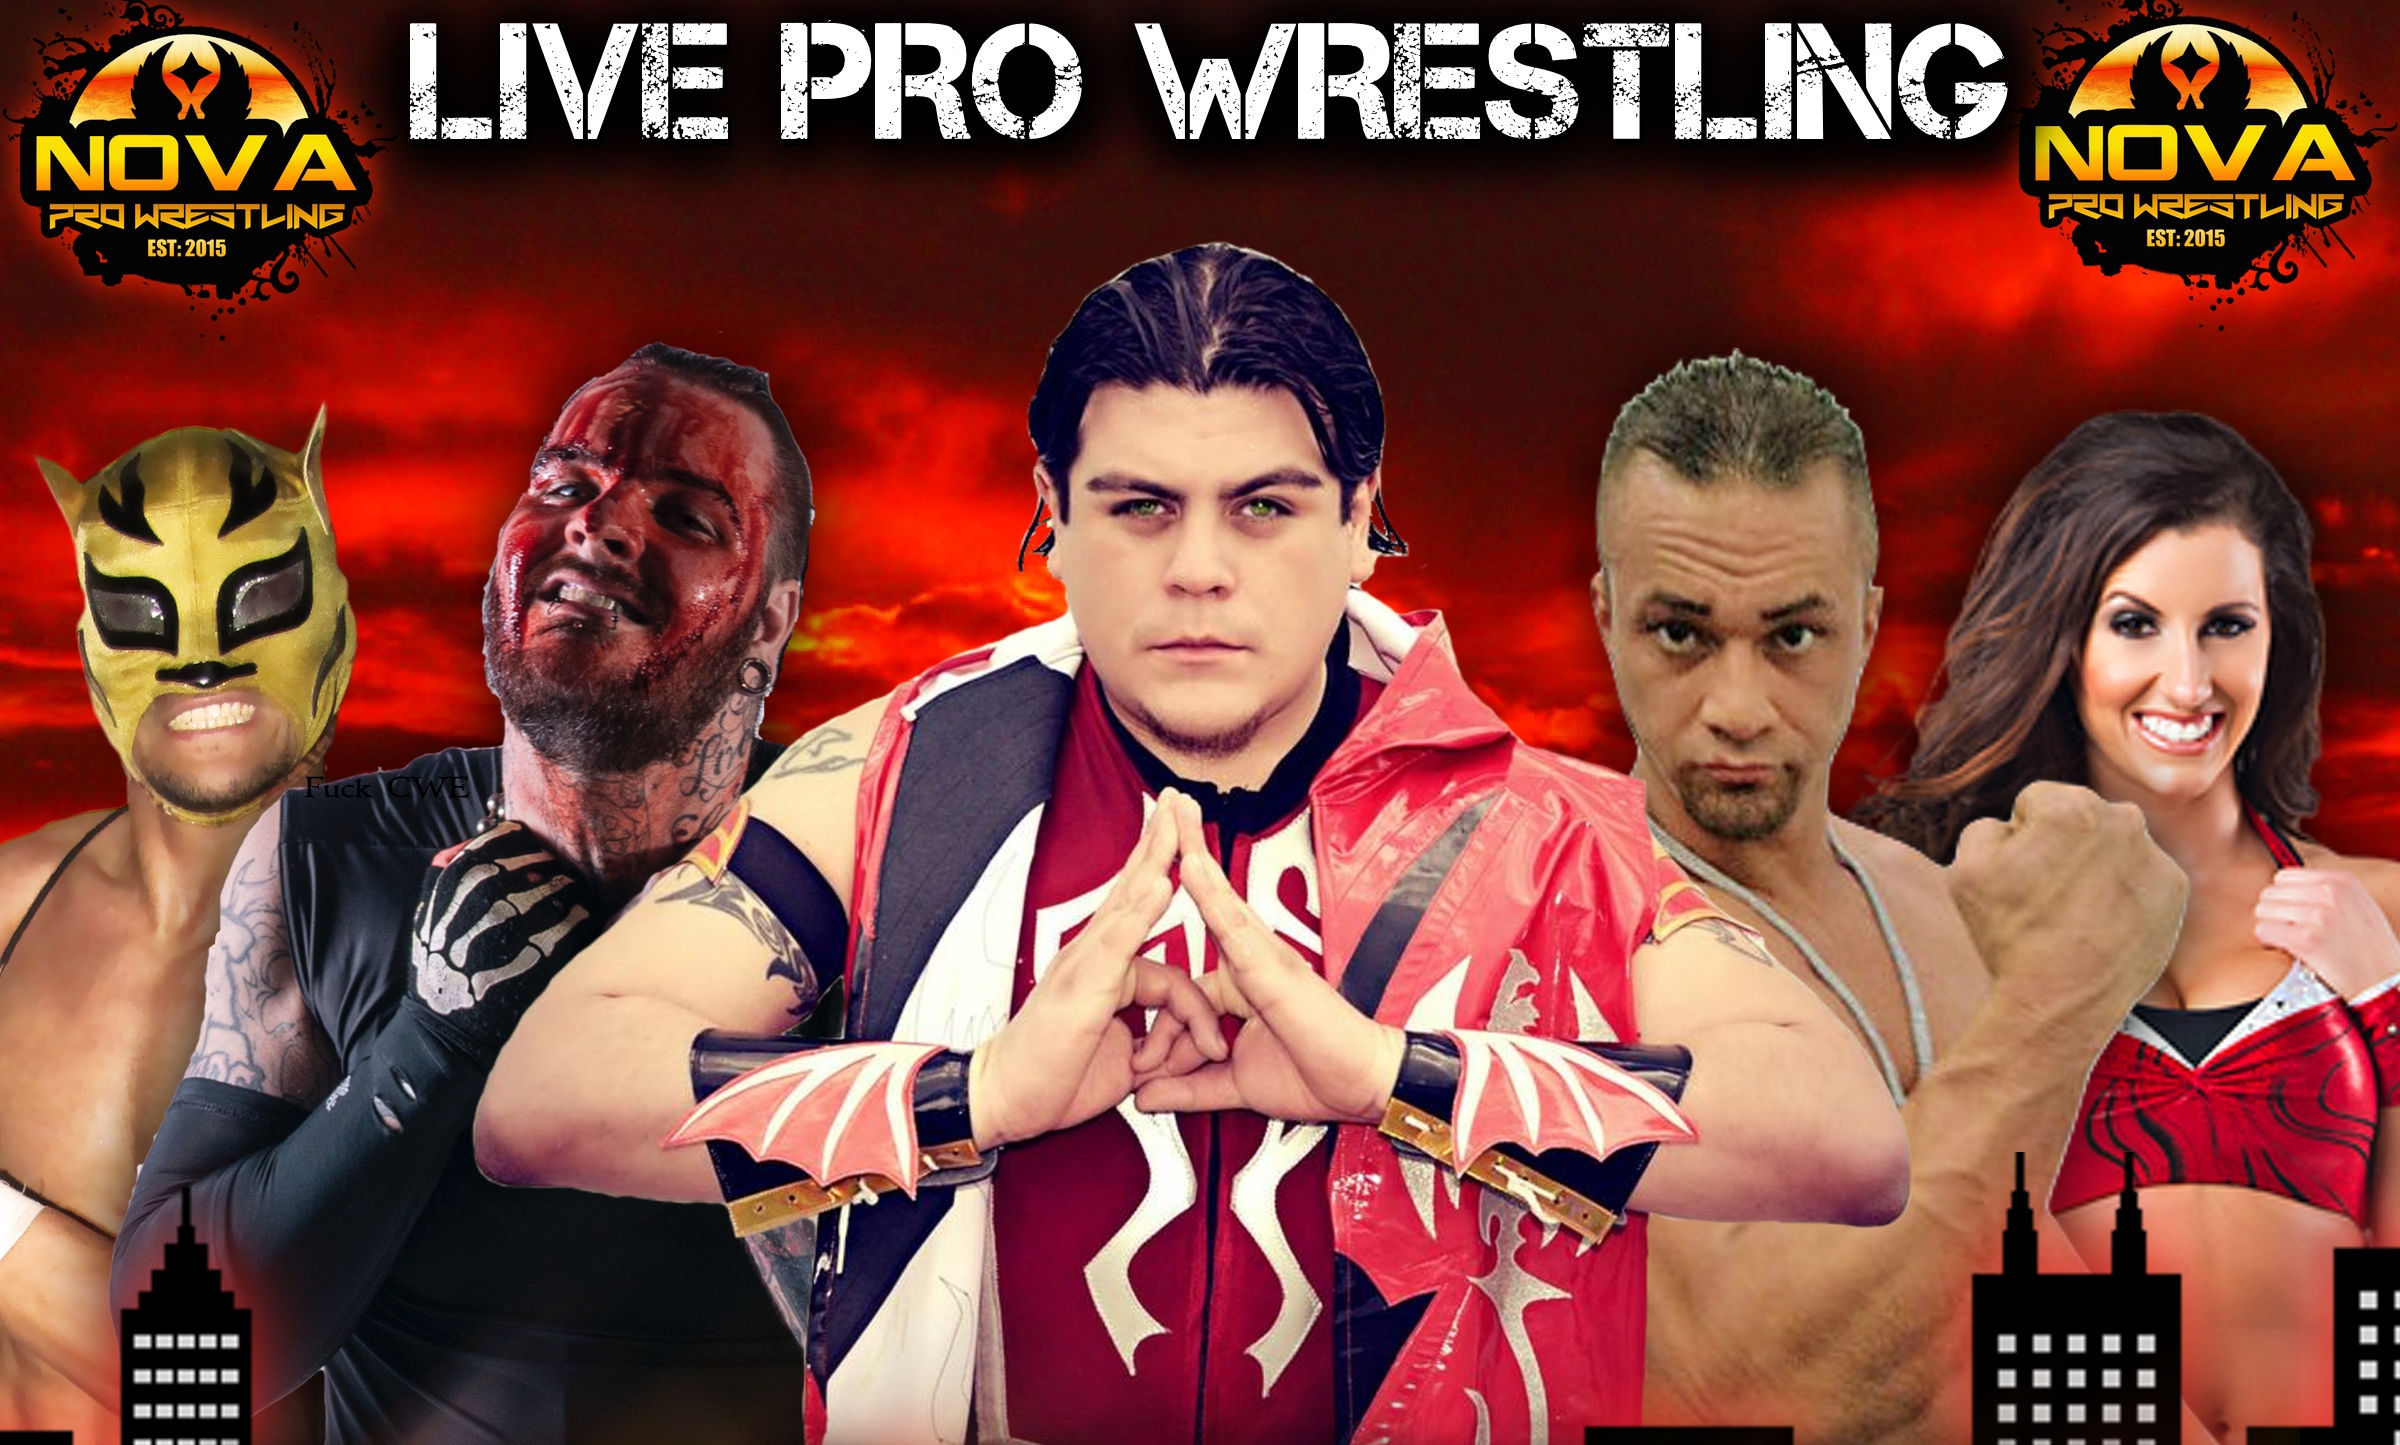 Nova Pro Wrestling returns this coming Saturday